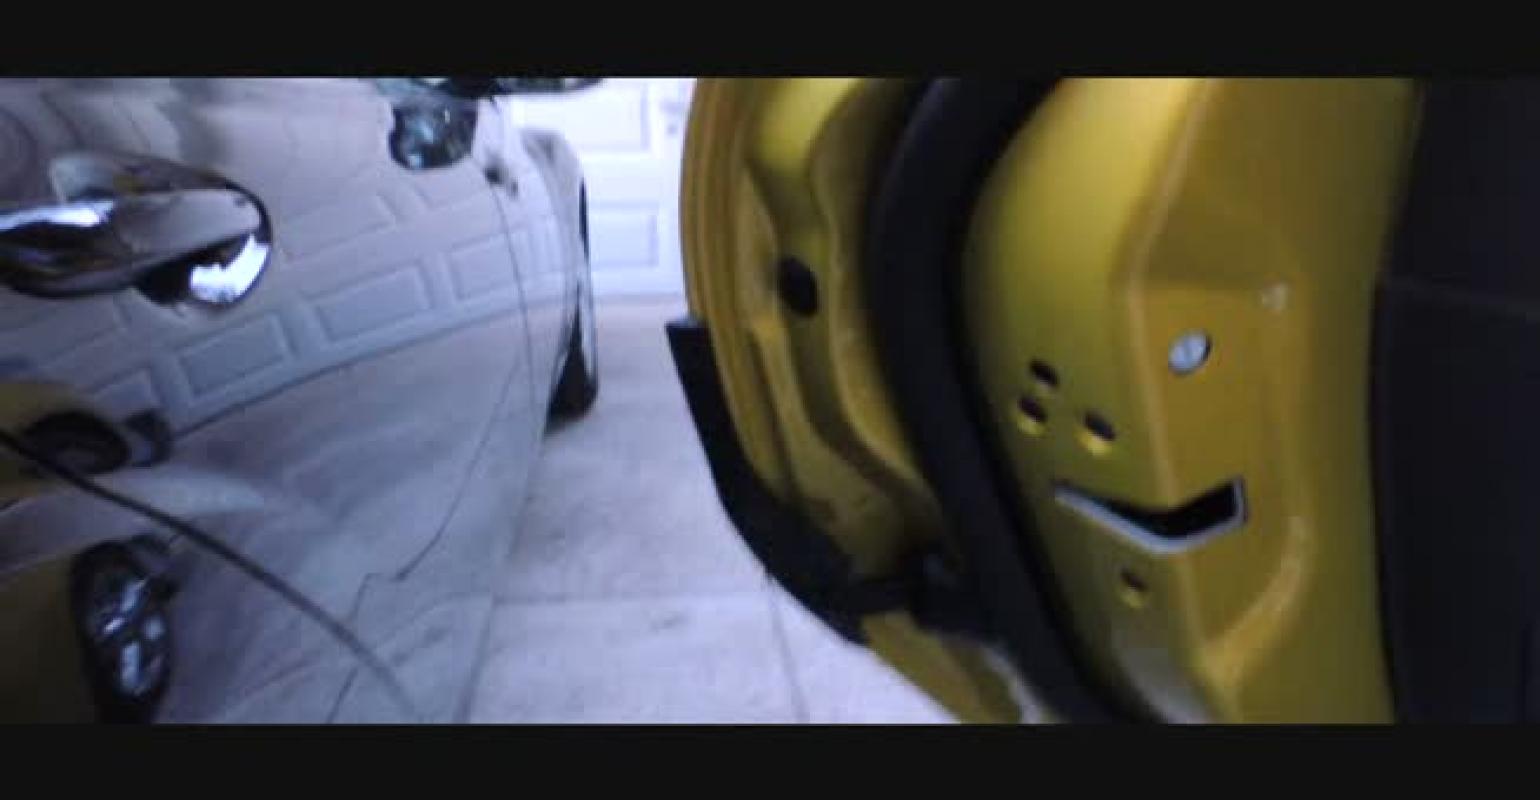 VIDEO: Ford Focus With Door Edge Protectors 